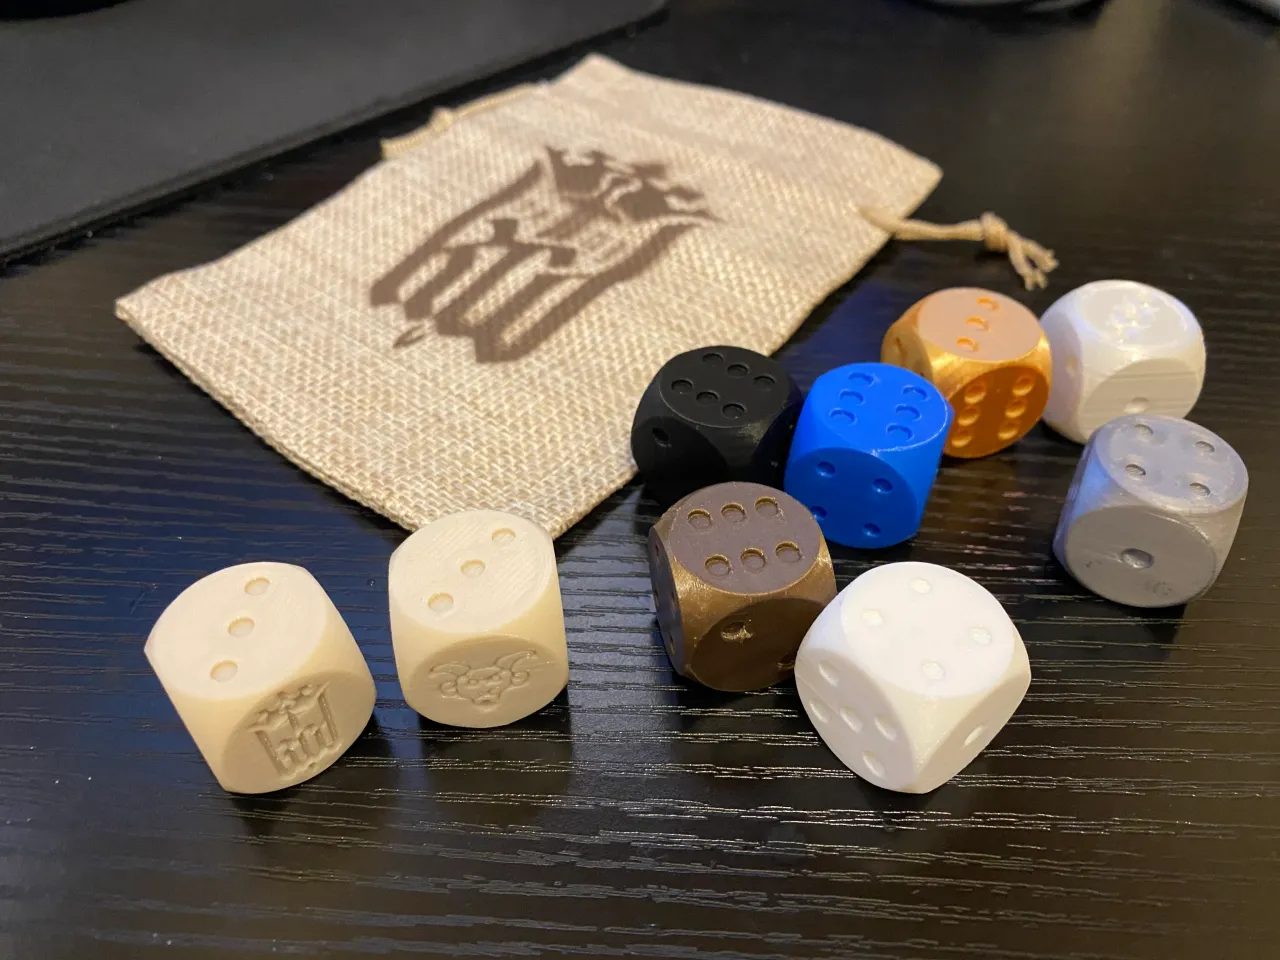 What dose this dice do? : r/kingdomcome